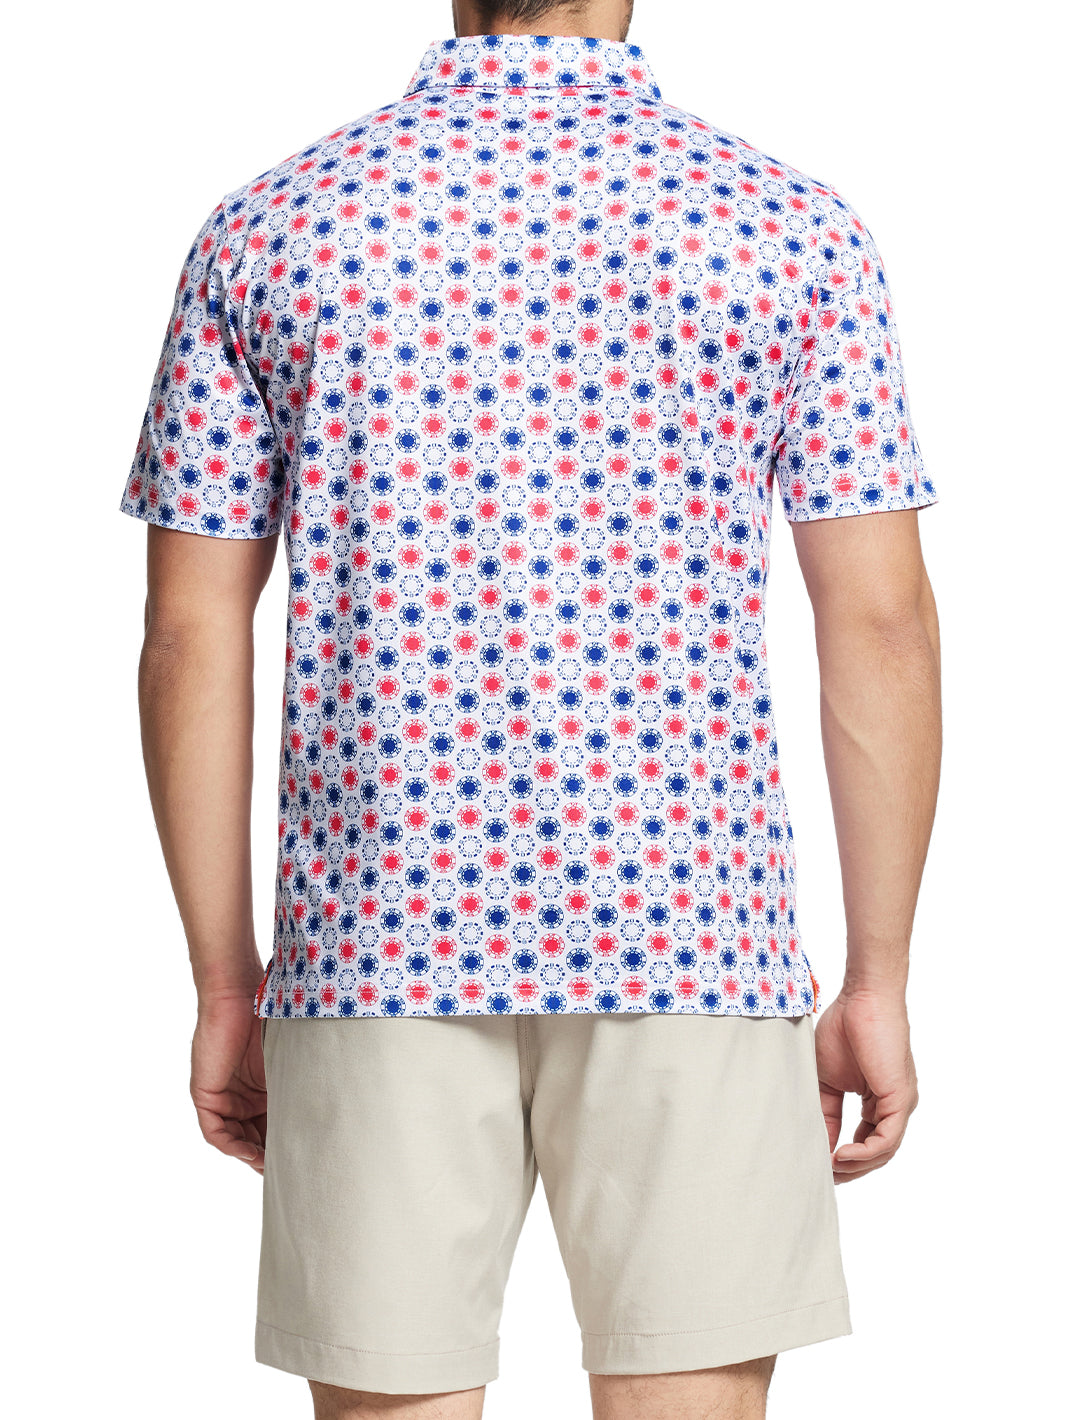 Men's Printed Golf Shirts-Chips